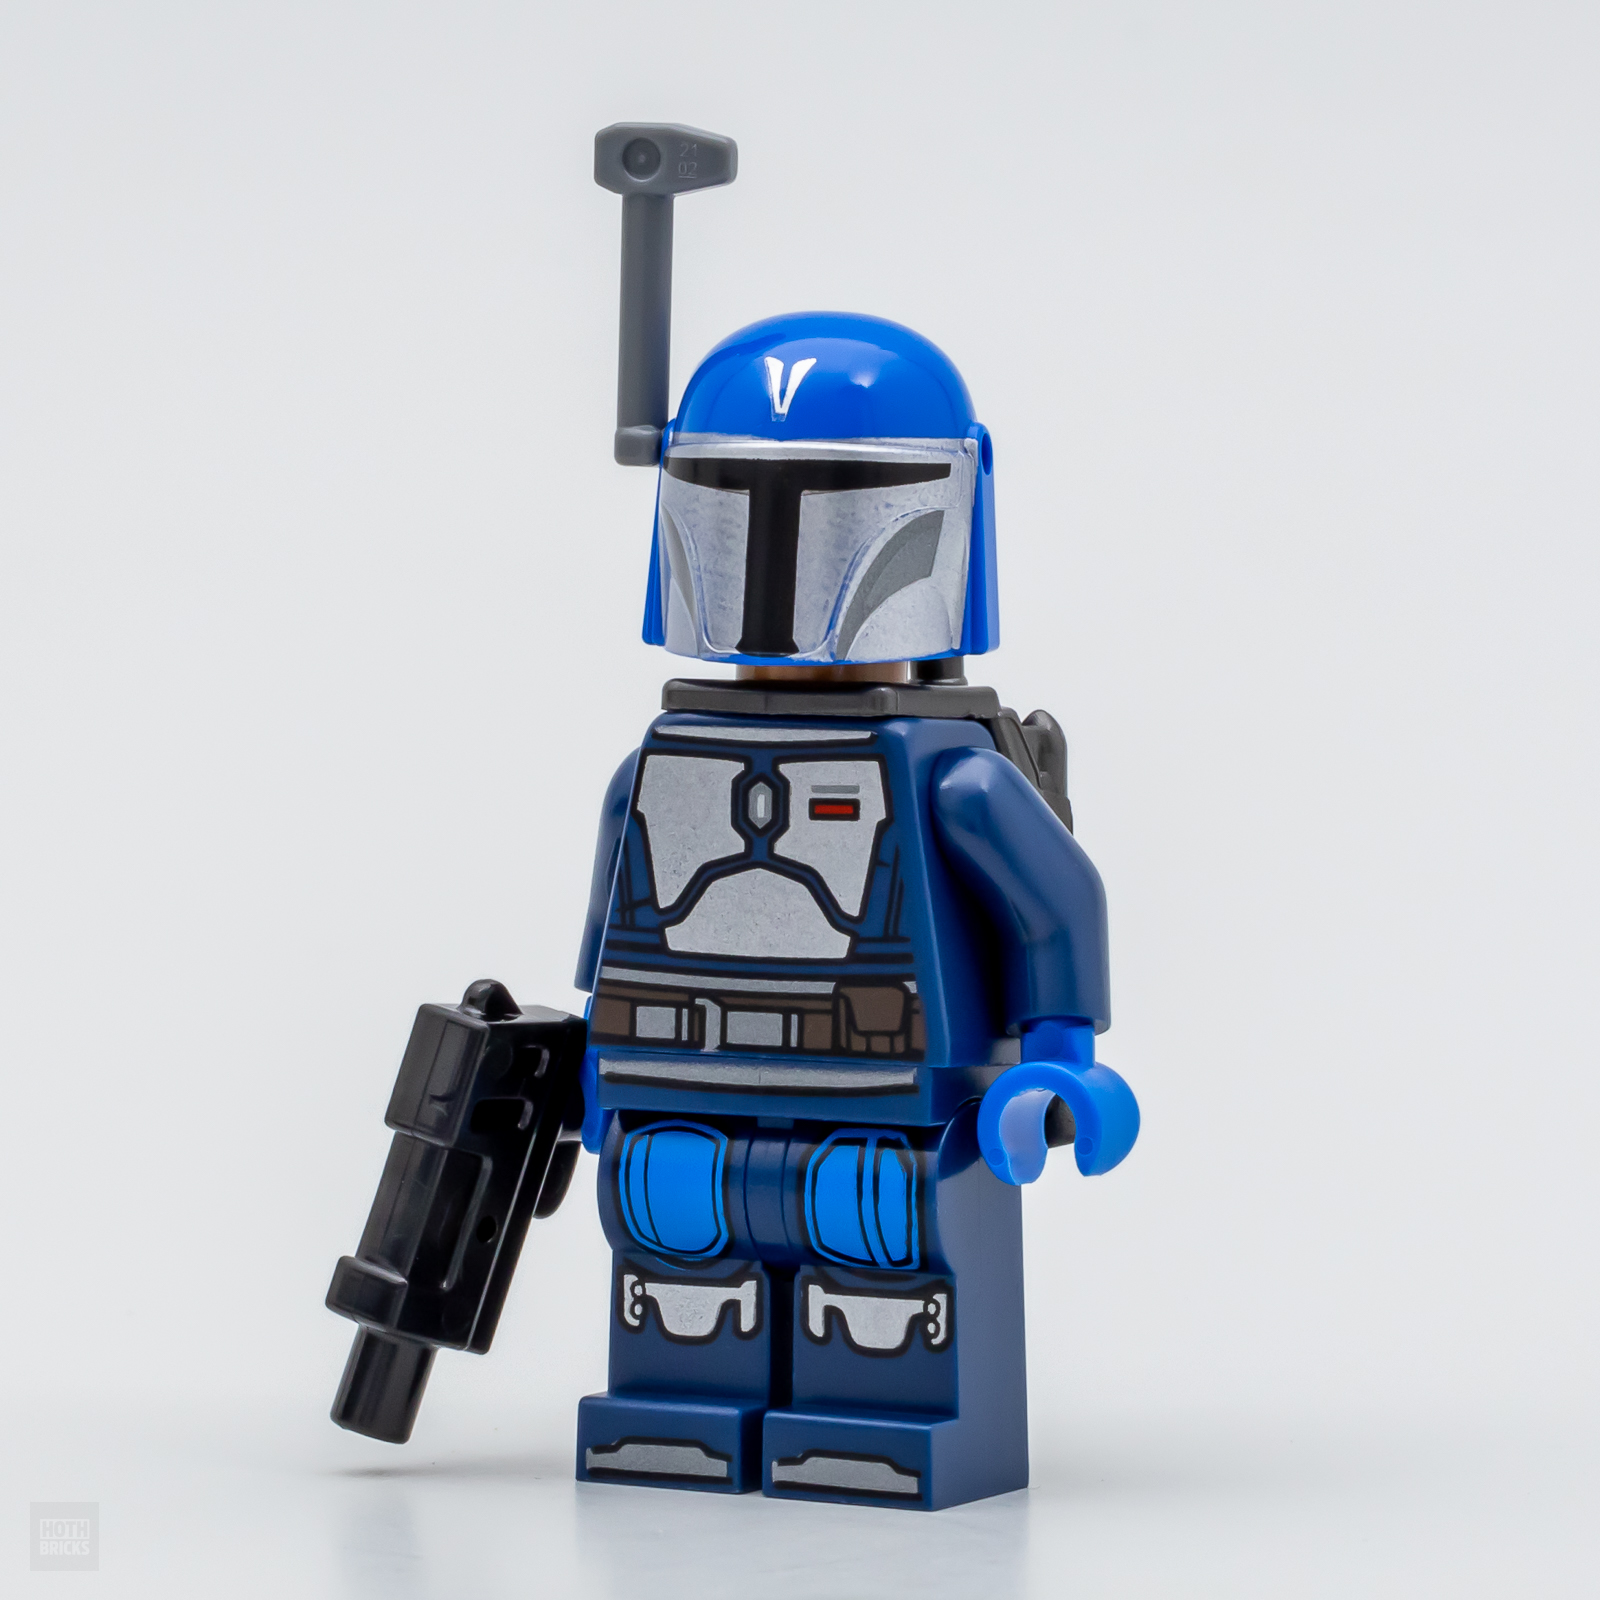 Vaisseaux et véhicules Star Wars, Wiki LEGO